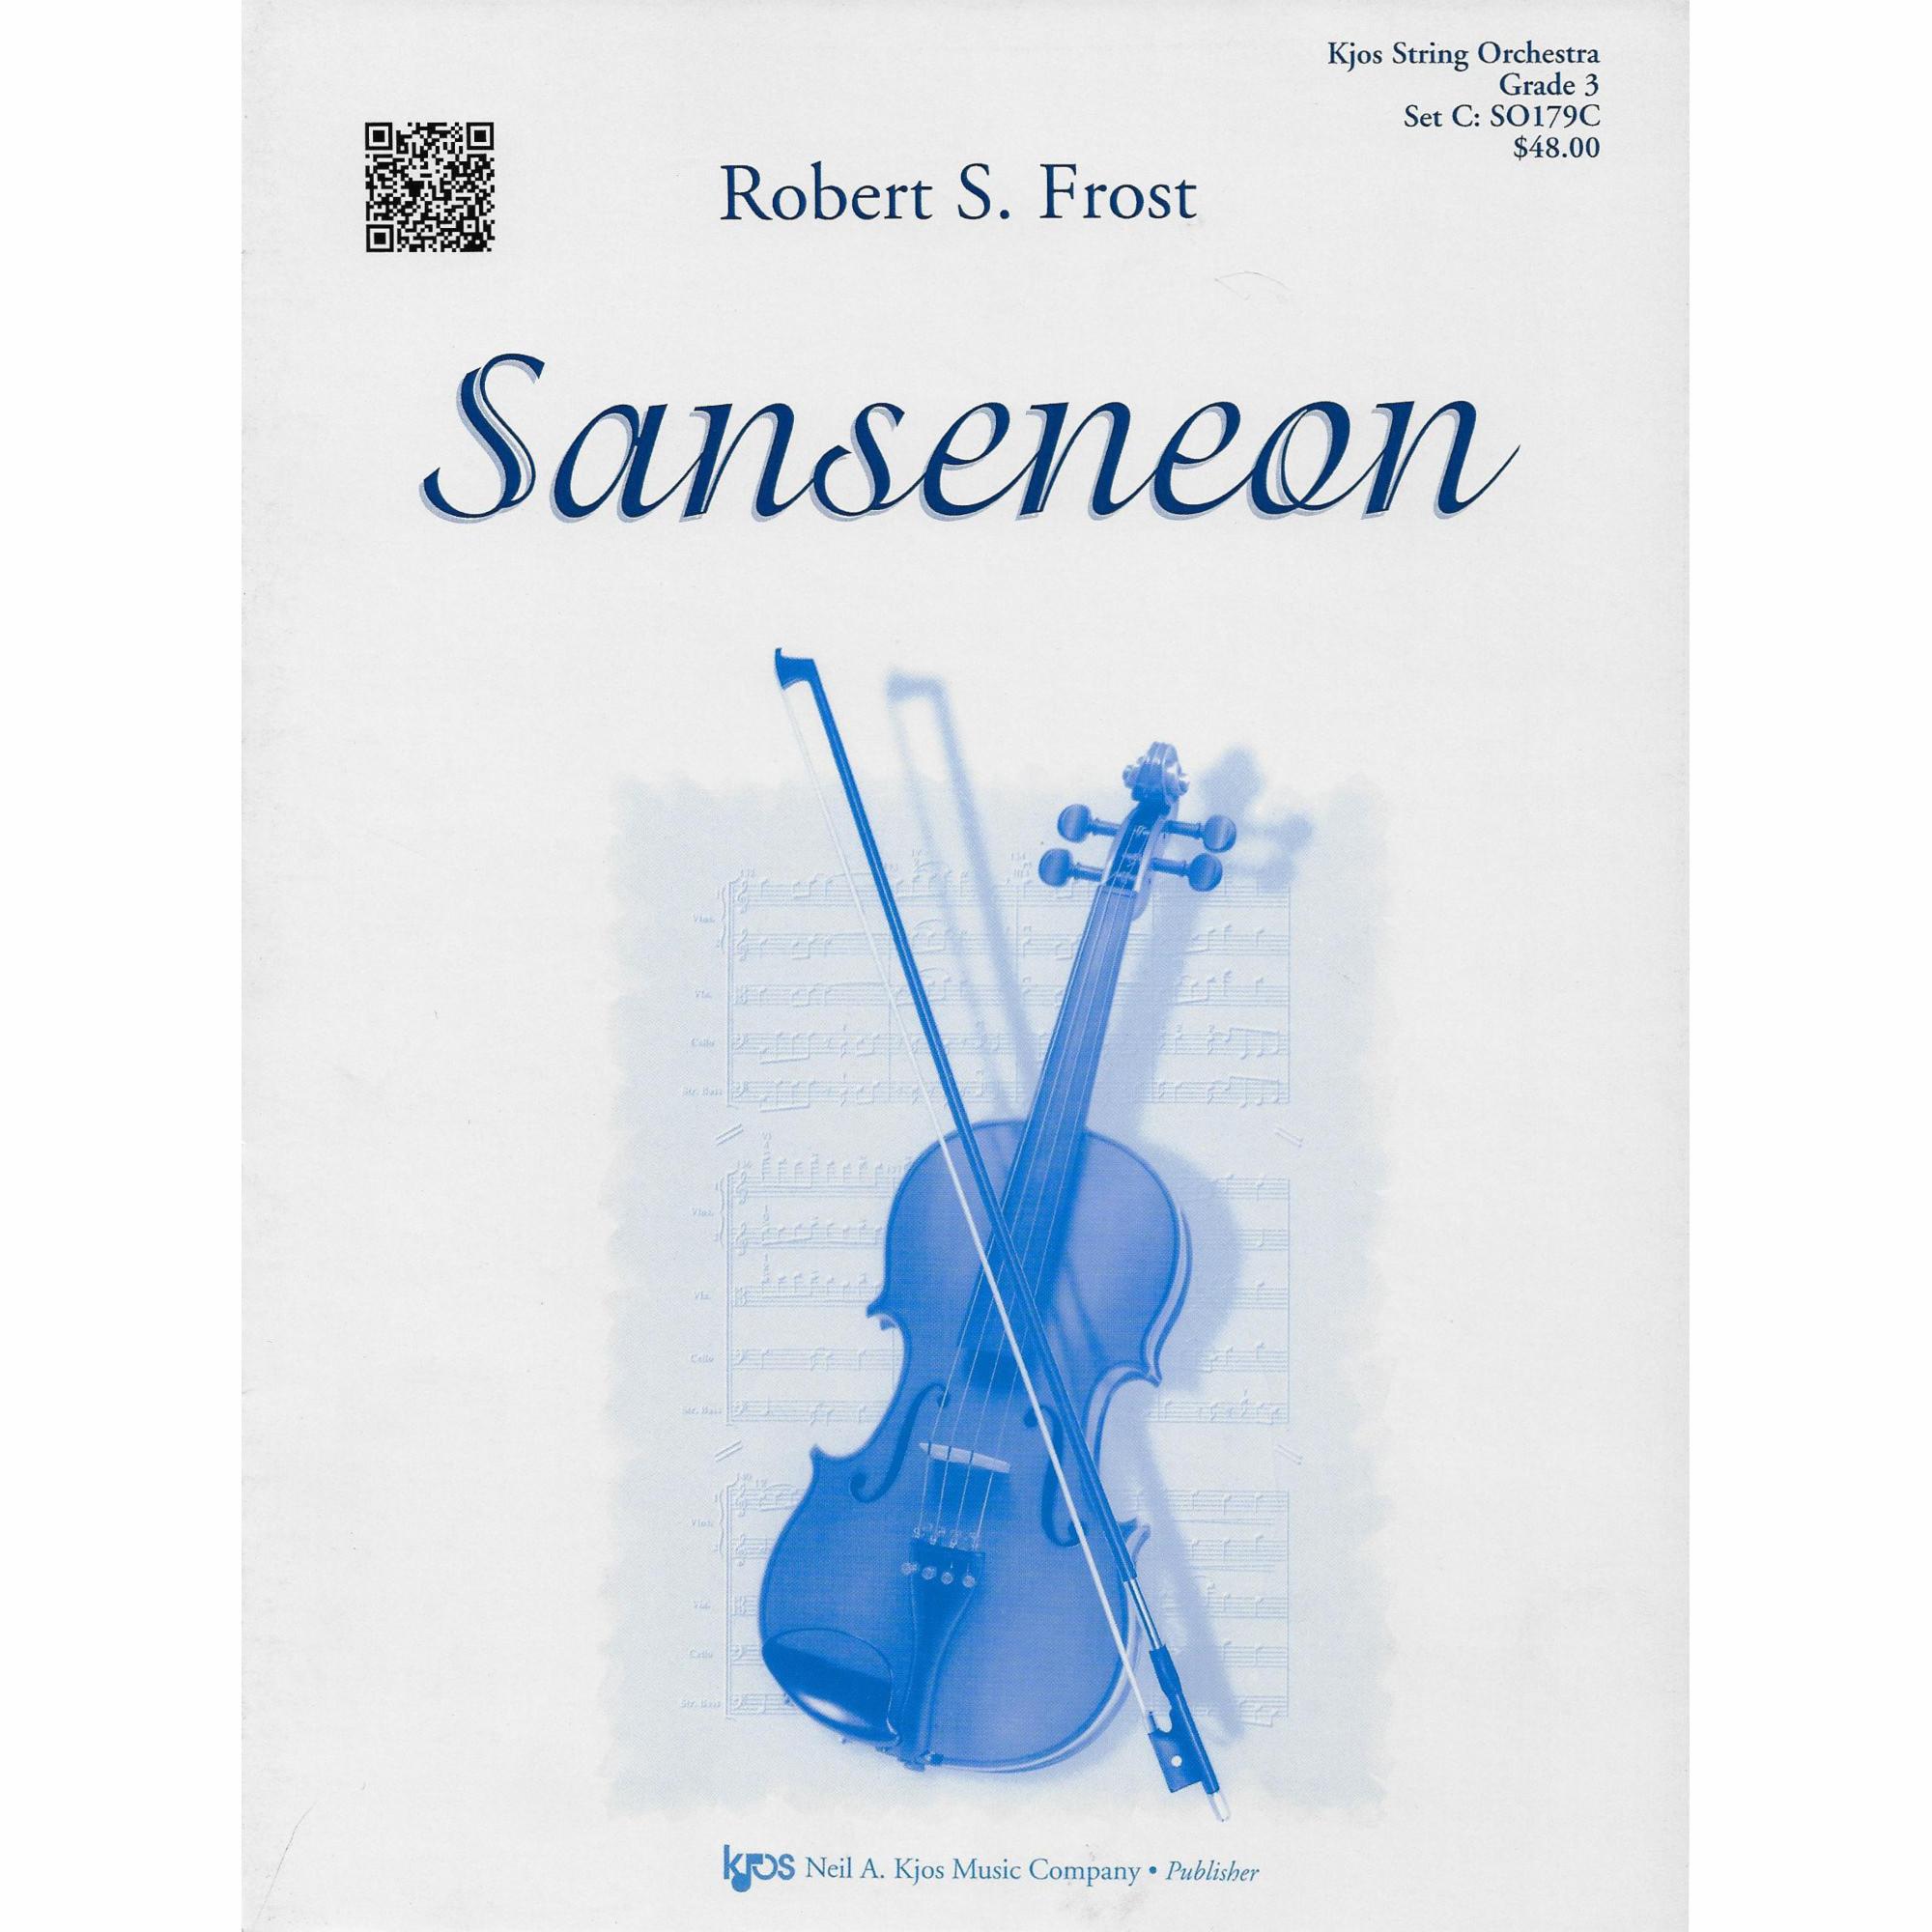 Sanseneon for String Orchestra